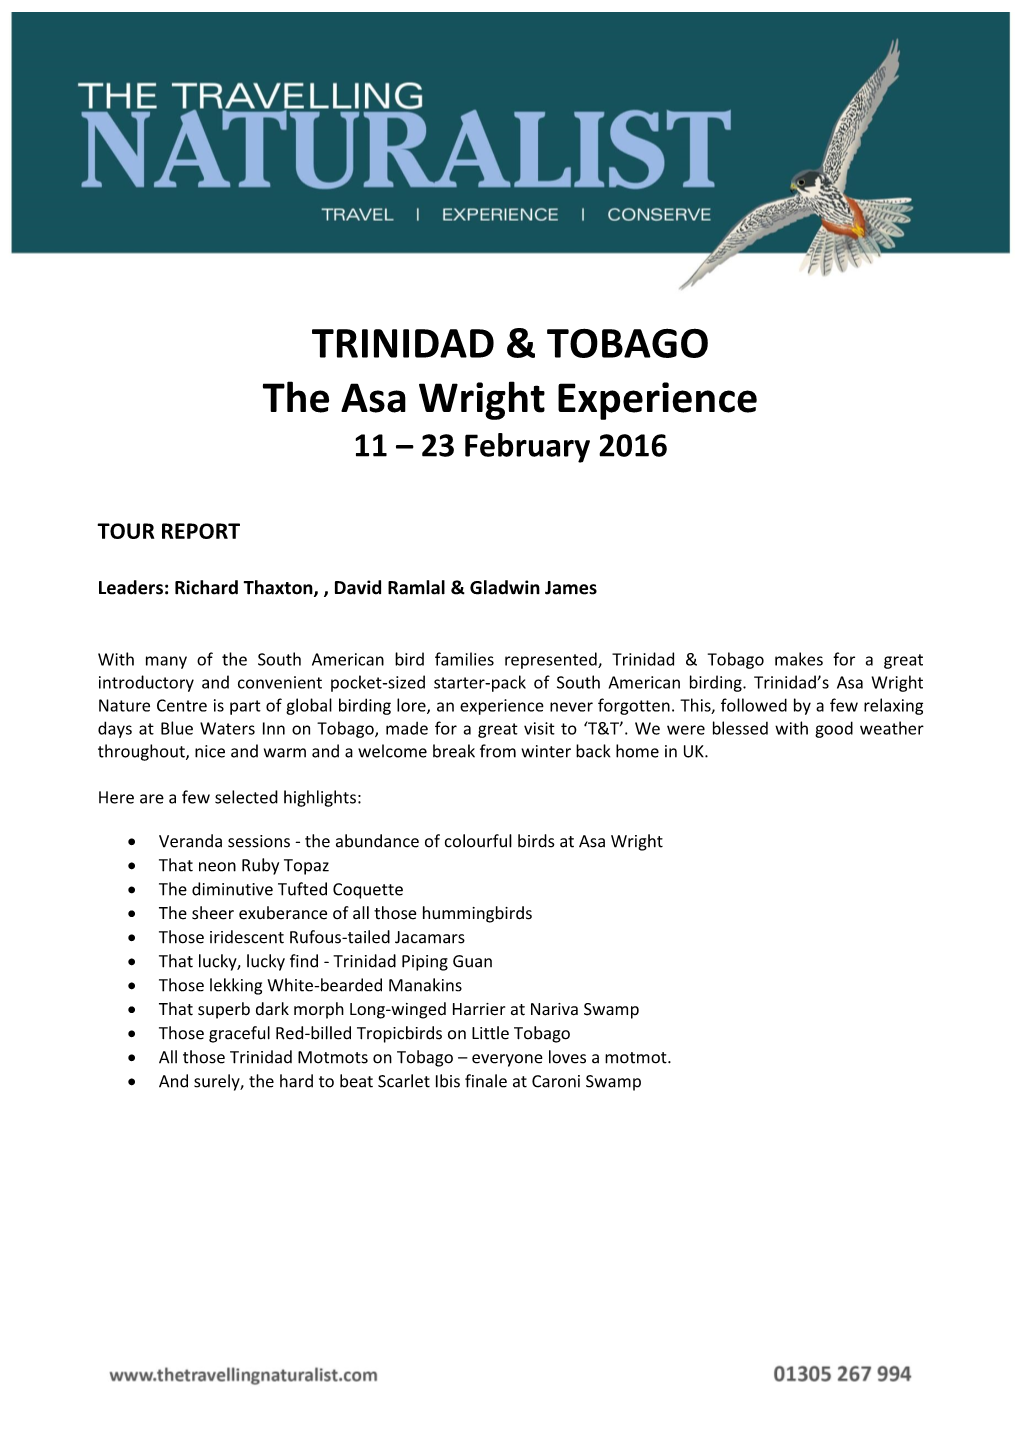 TRINIDAD & TOBAGO the Asa Wright Experience